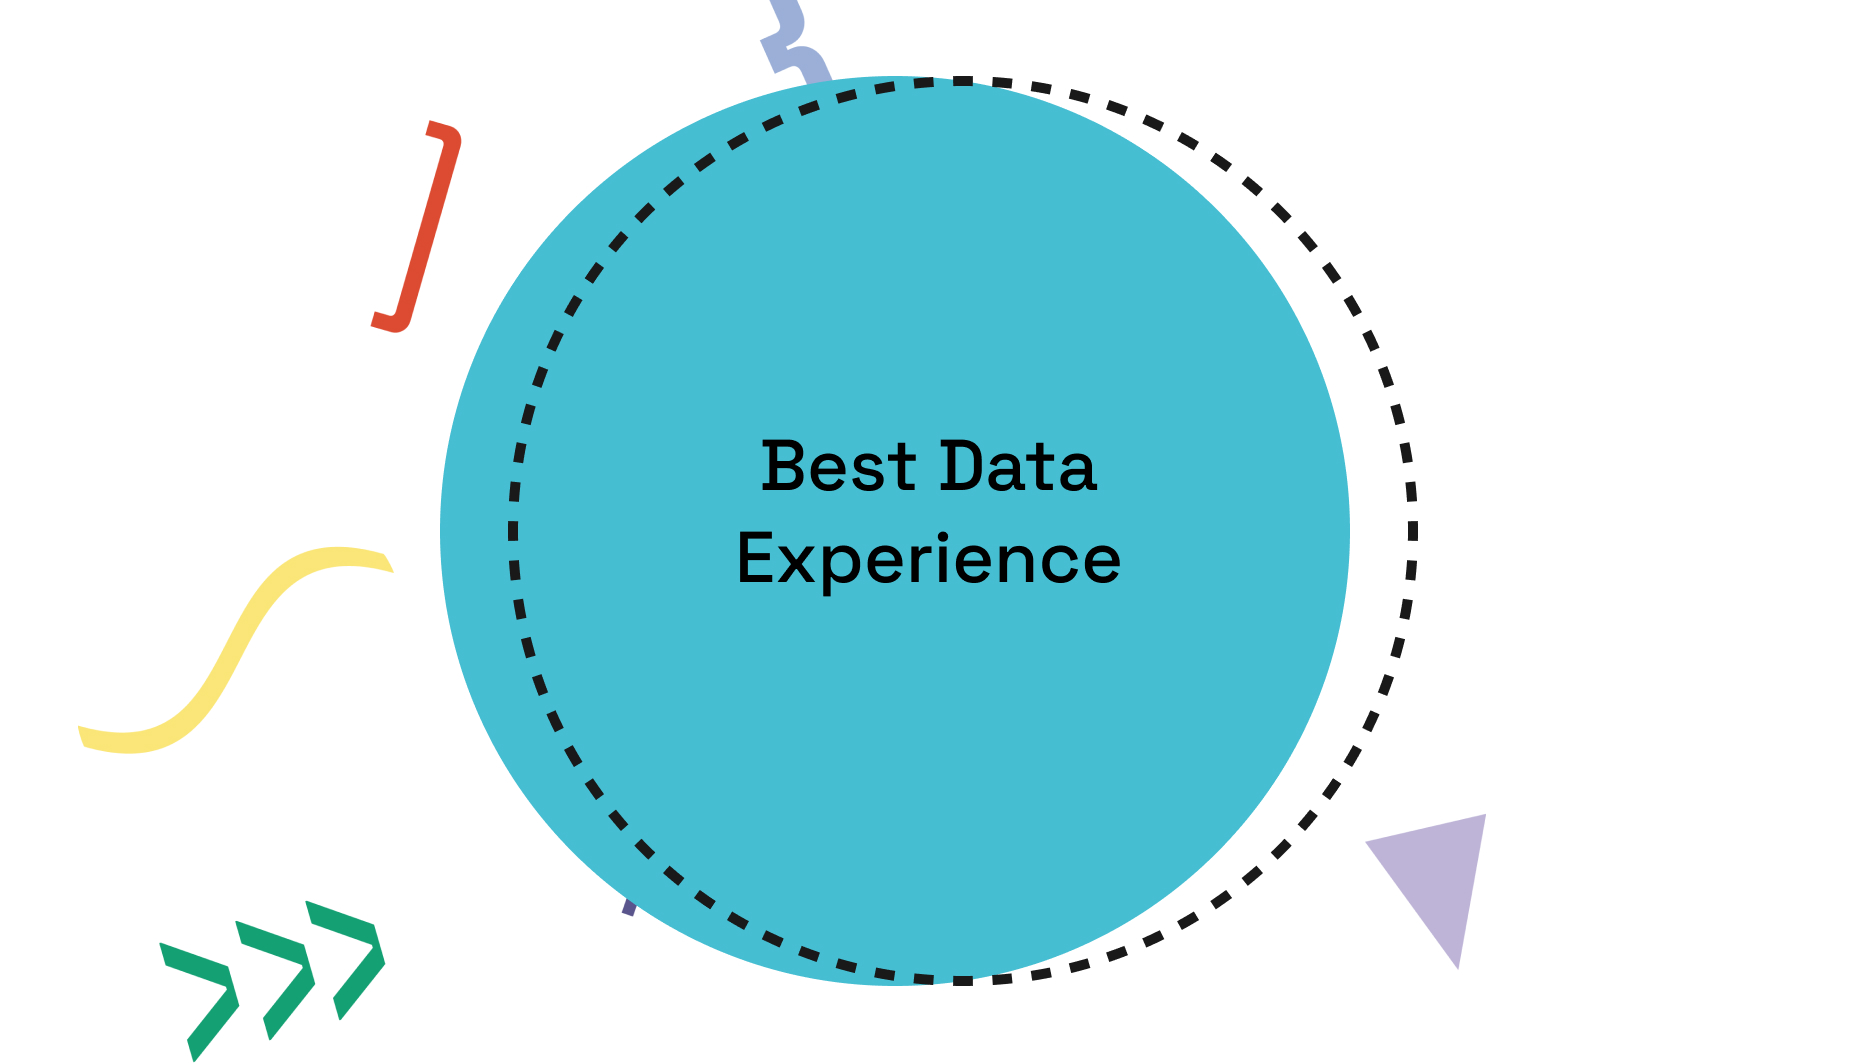 Unser Anspruch: Best Data Experience